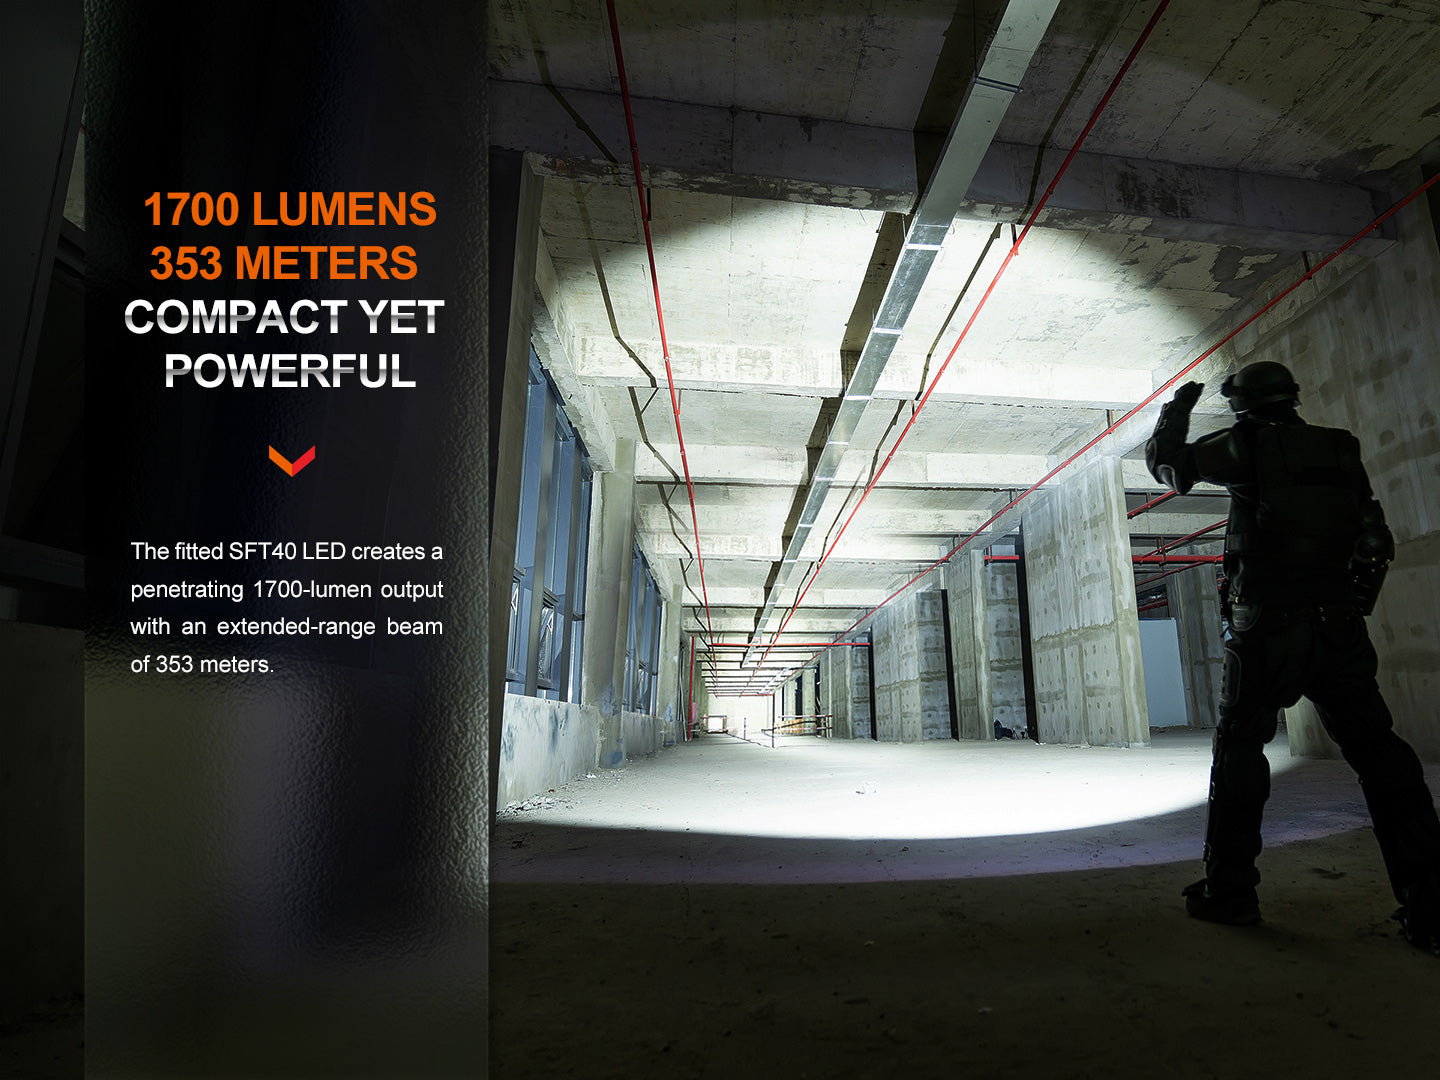 Fenix PD35R Rechargeable Flashlight (1700 Lumens)